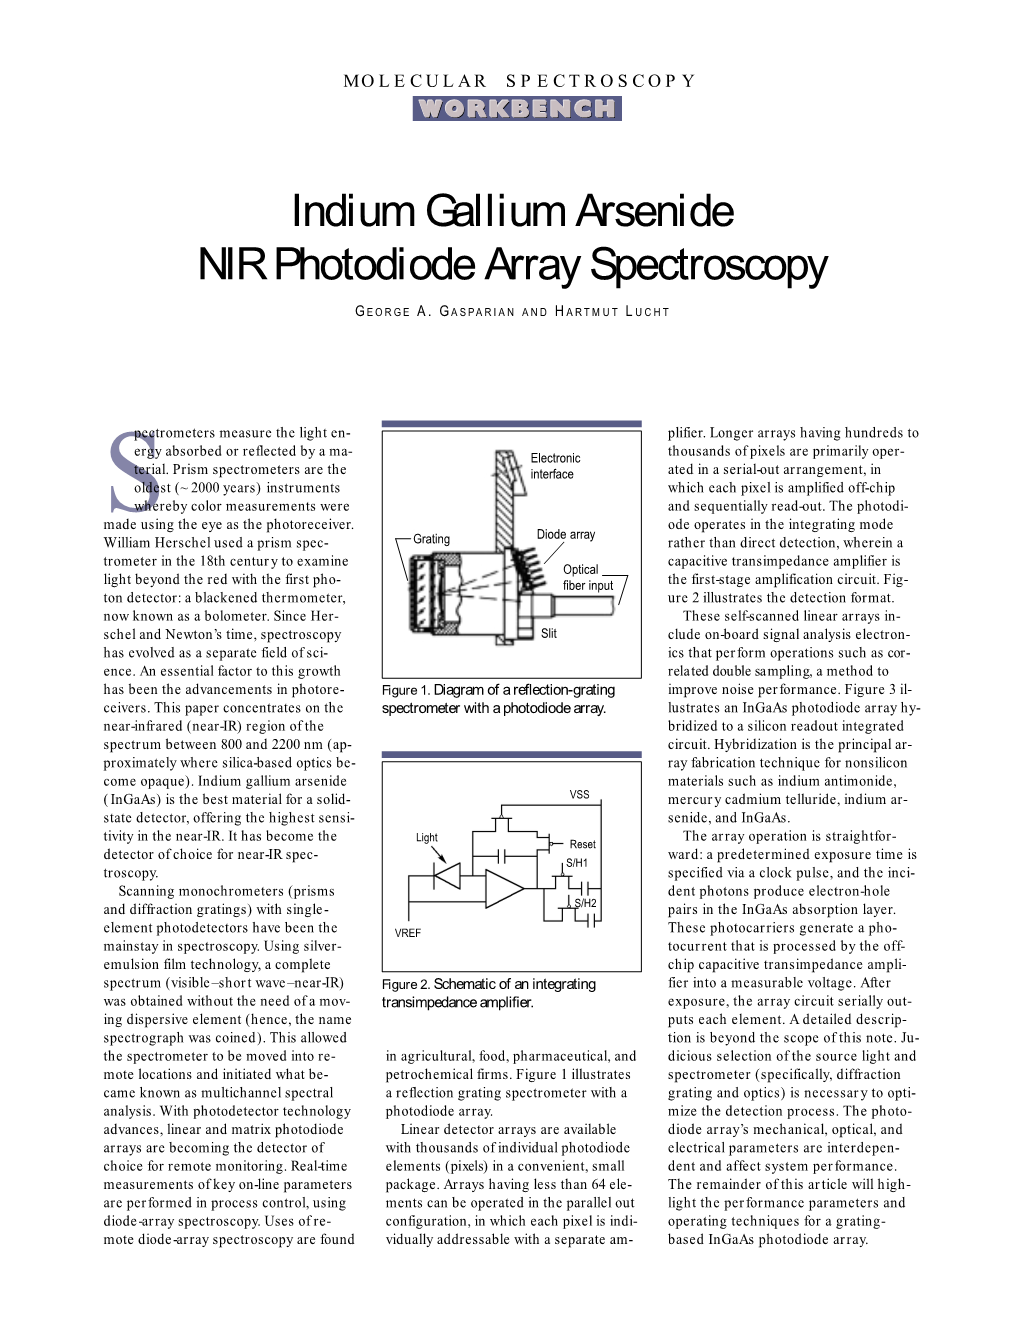 Indium Gallium Arsenide NIR Photodiode Array Spectroscopy